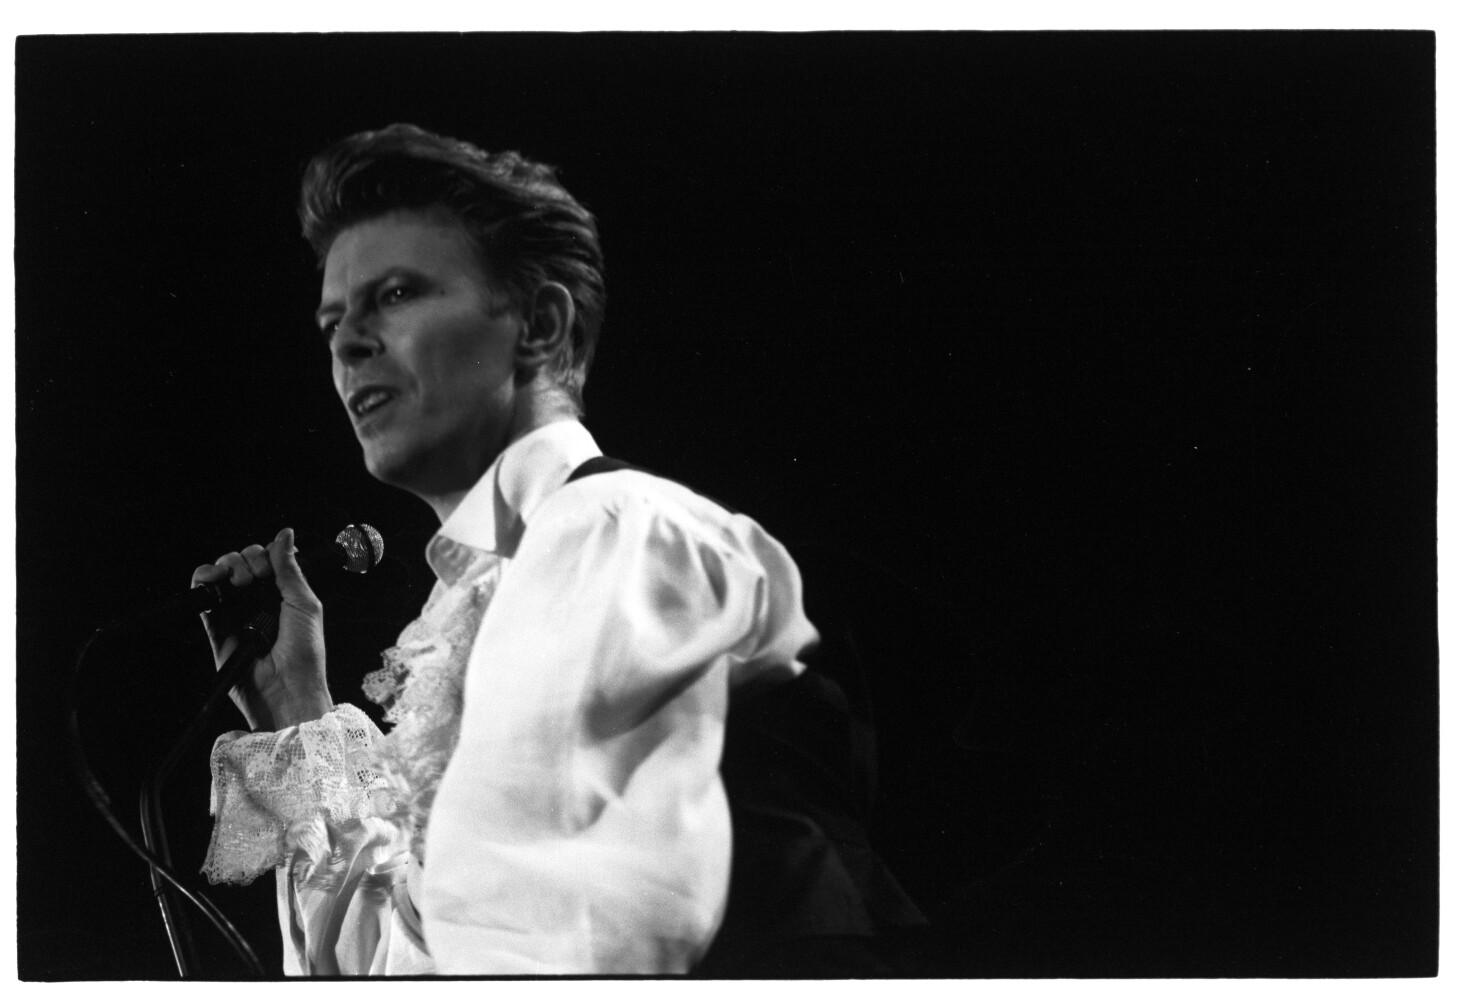 David Bowie 31.8.1990 I N4 (Rita Maier / Schwules Museum Berlin RR-P)